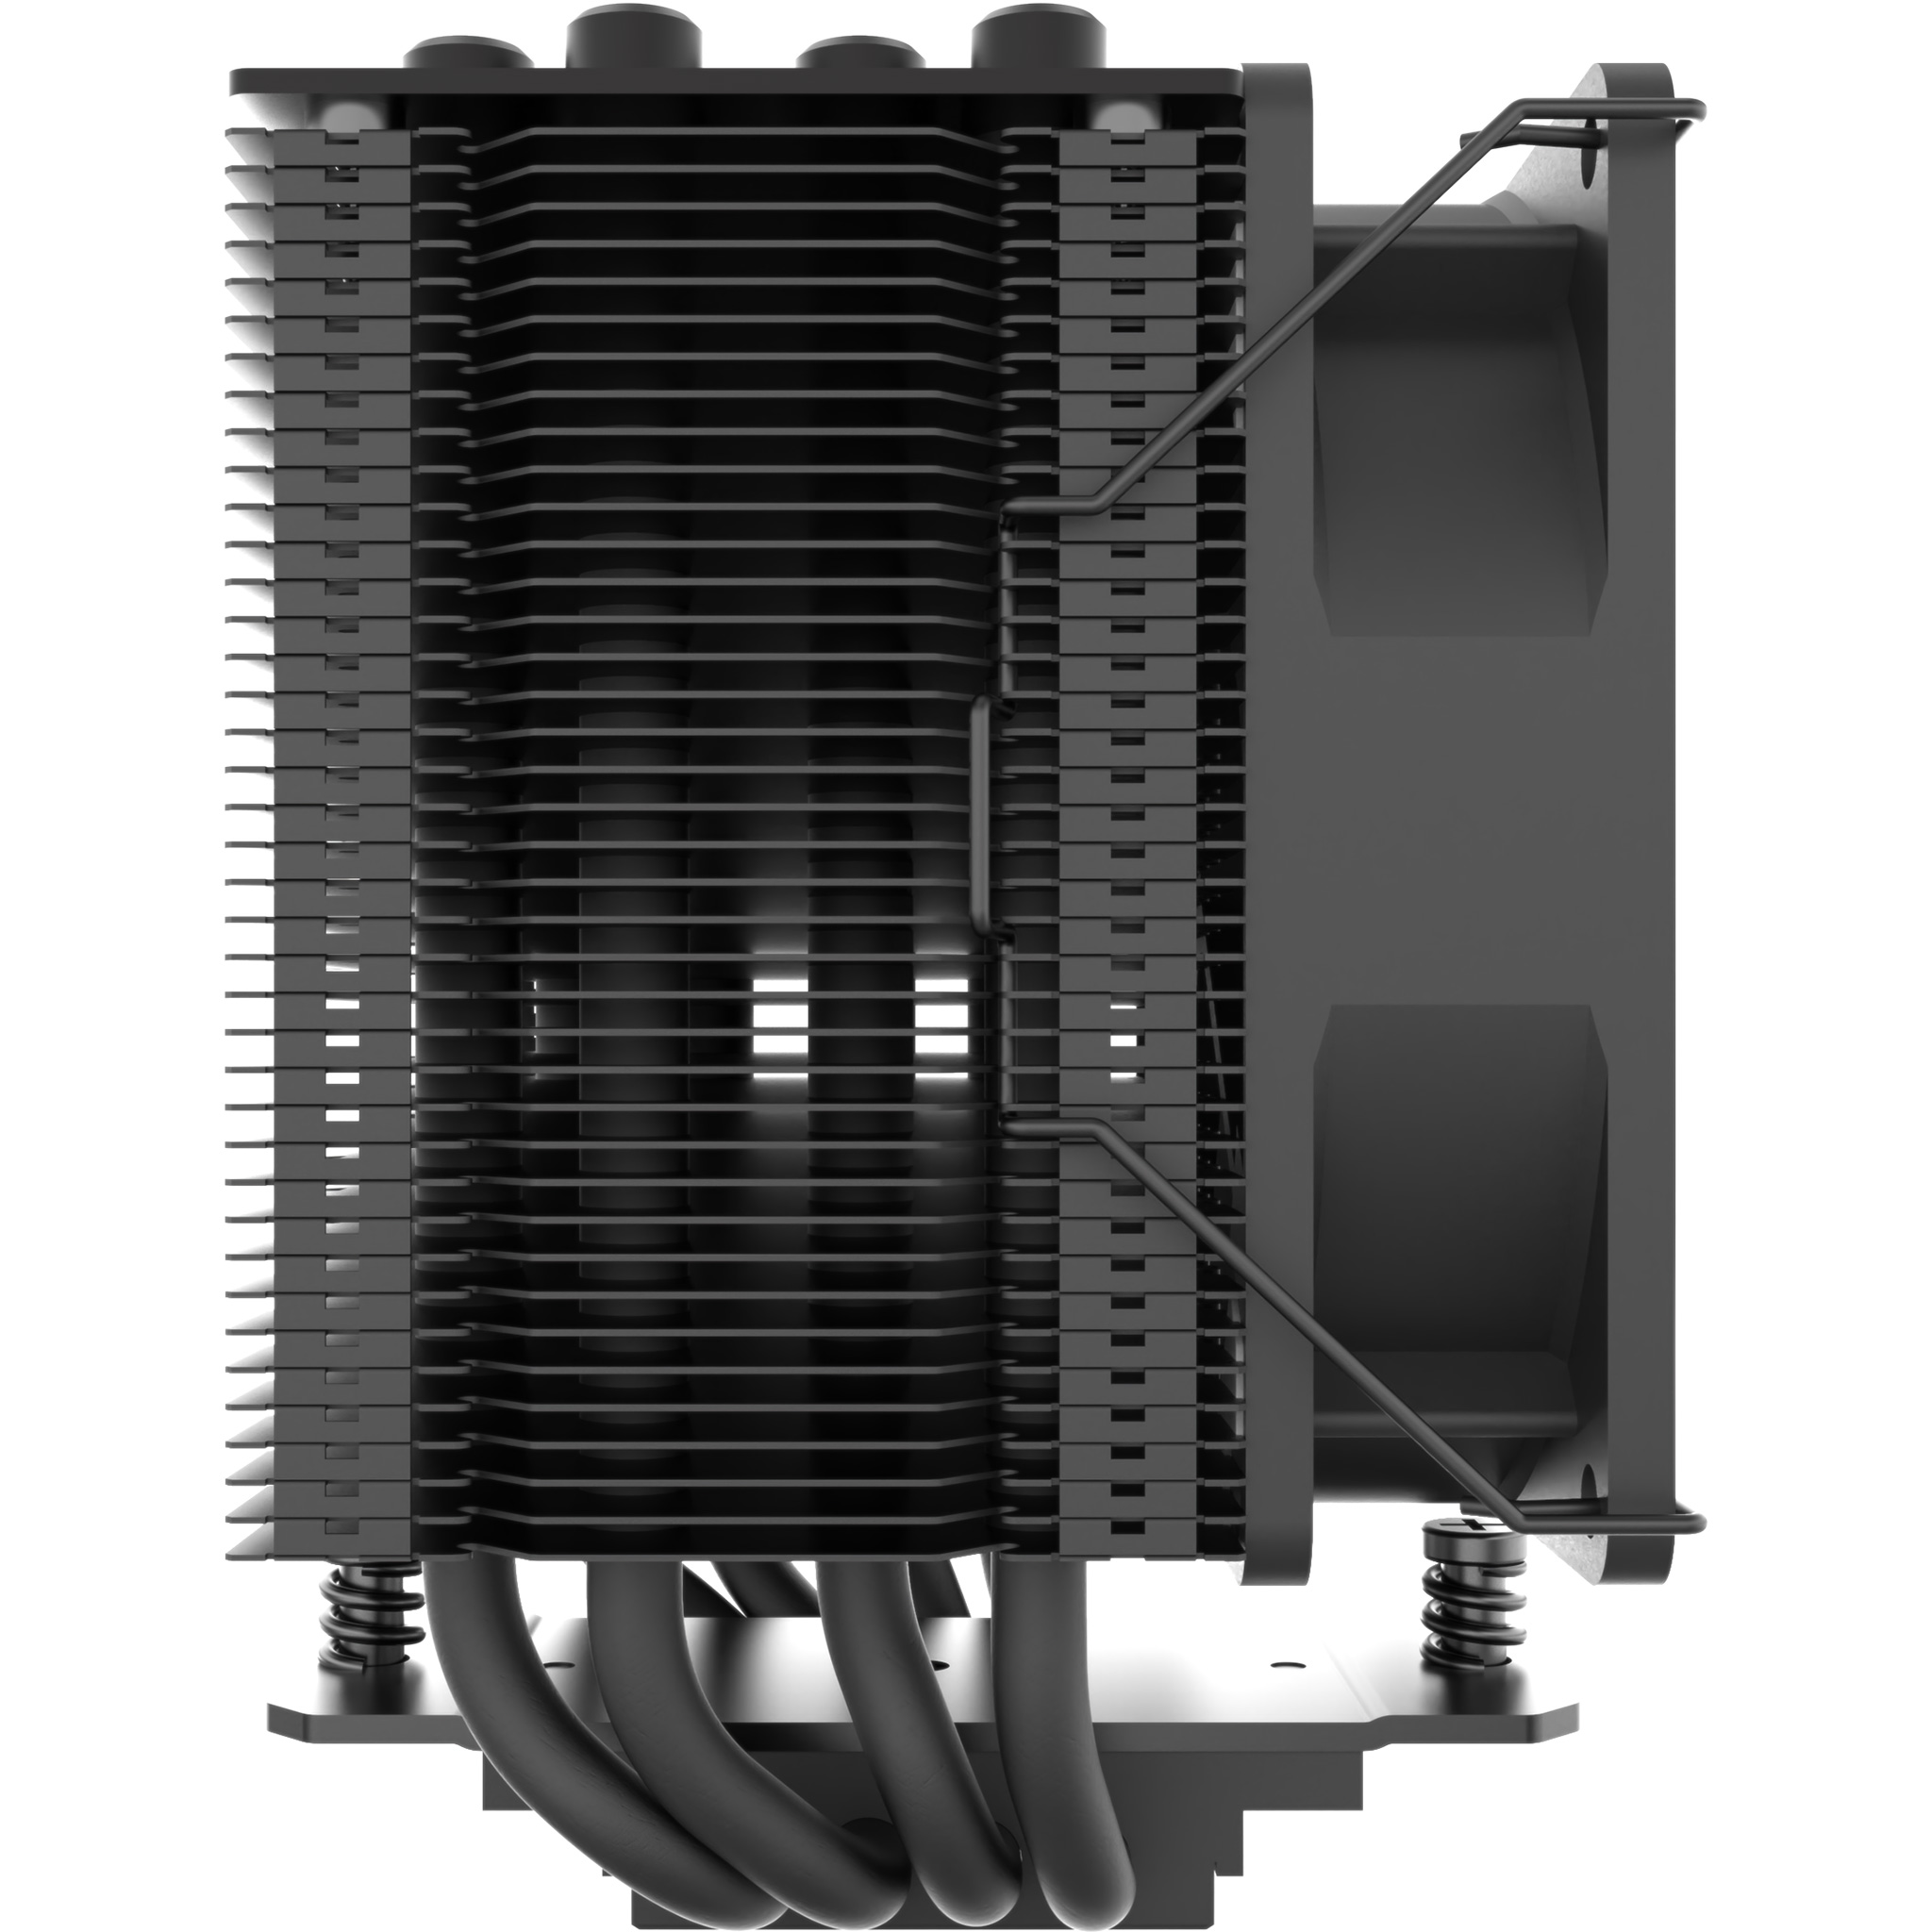 Alpenföhn Dolomit CPU Cooler - 92 mm